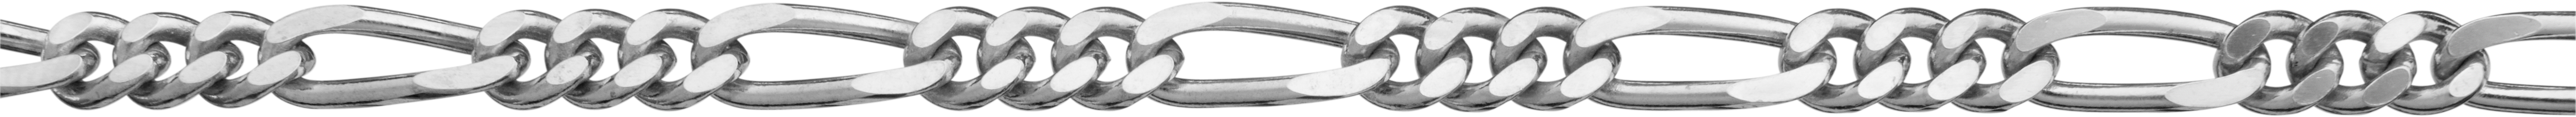 figaro ketting zilver 925/- 4,00mm, draad dikte 1,20mm